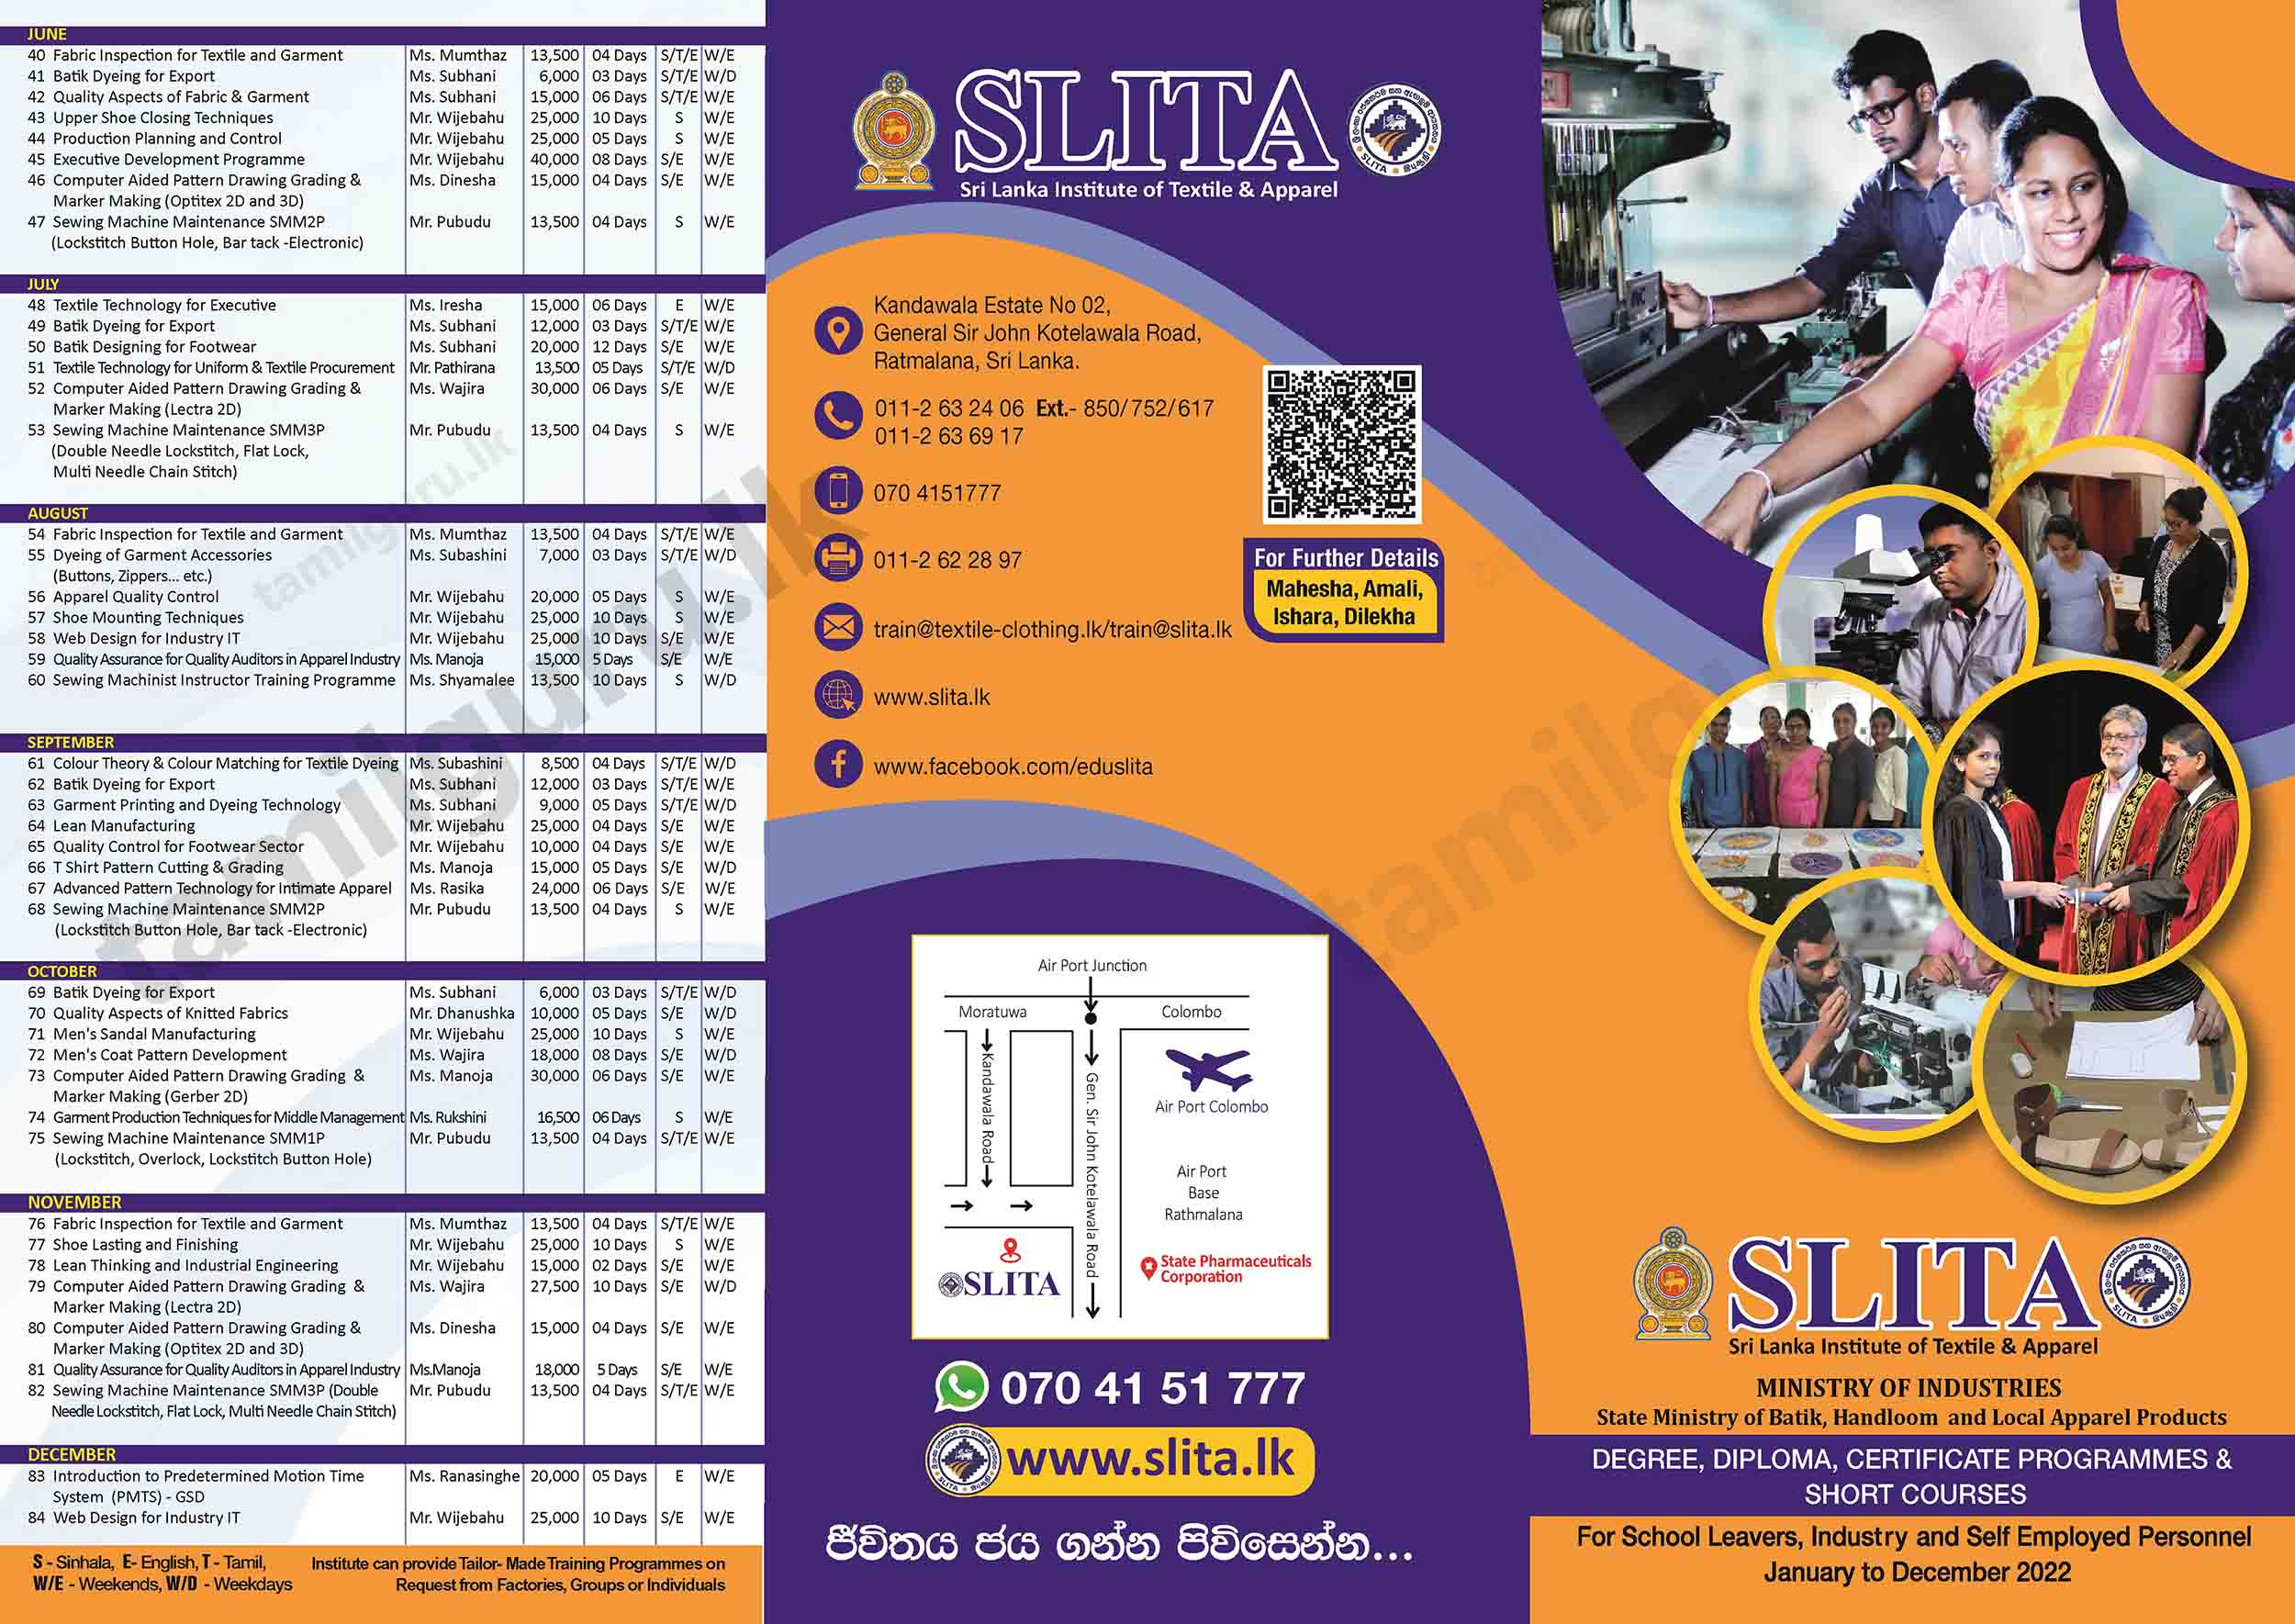 Sri Lanka Institute of Textile & Apparel (SLITA) - Training Calendar 2022 (Upcoming Courses List)